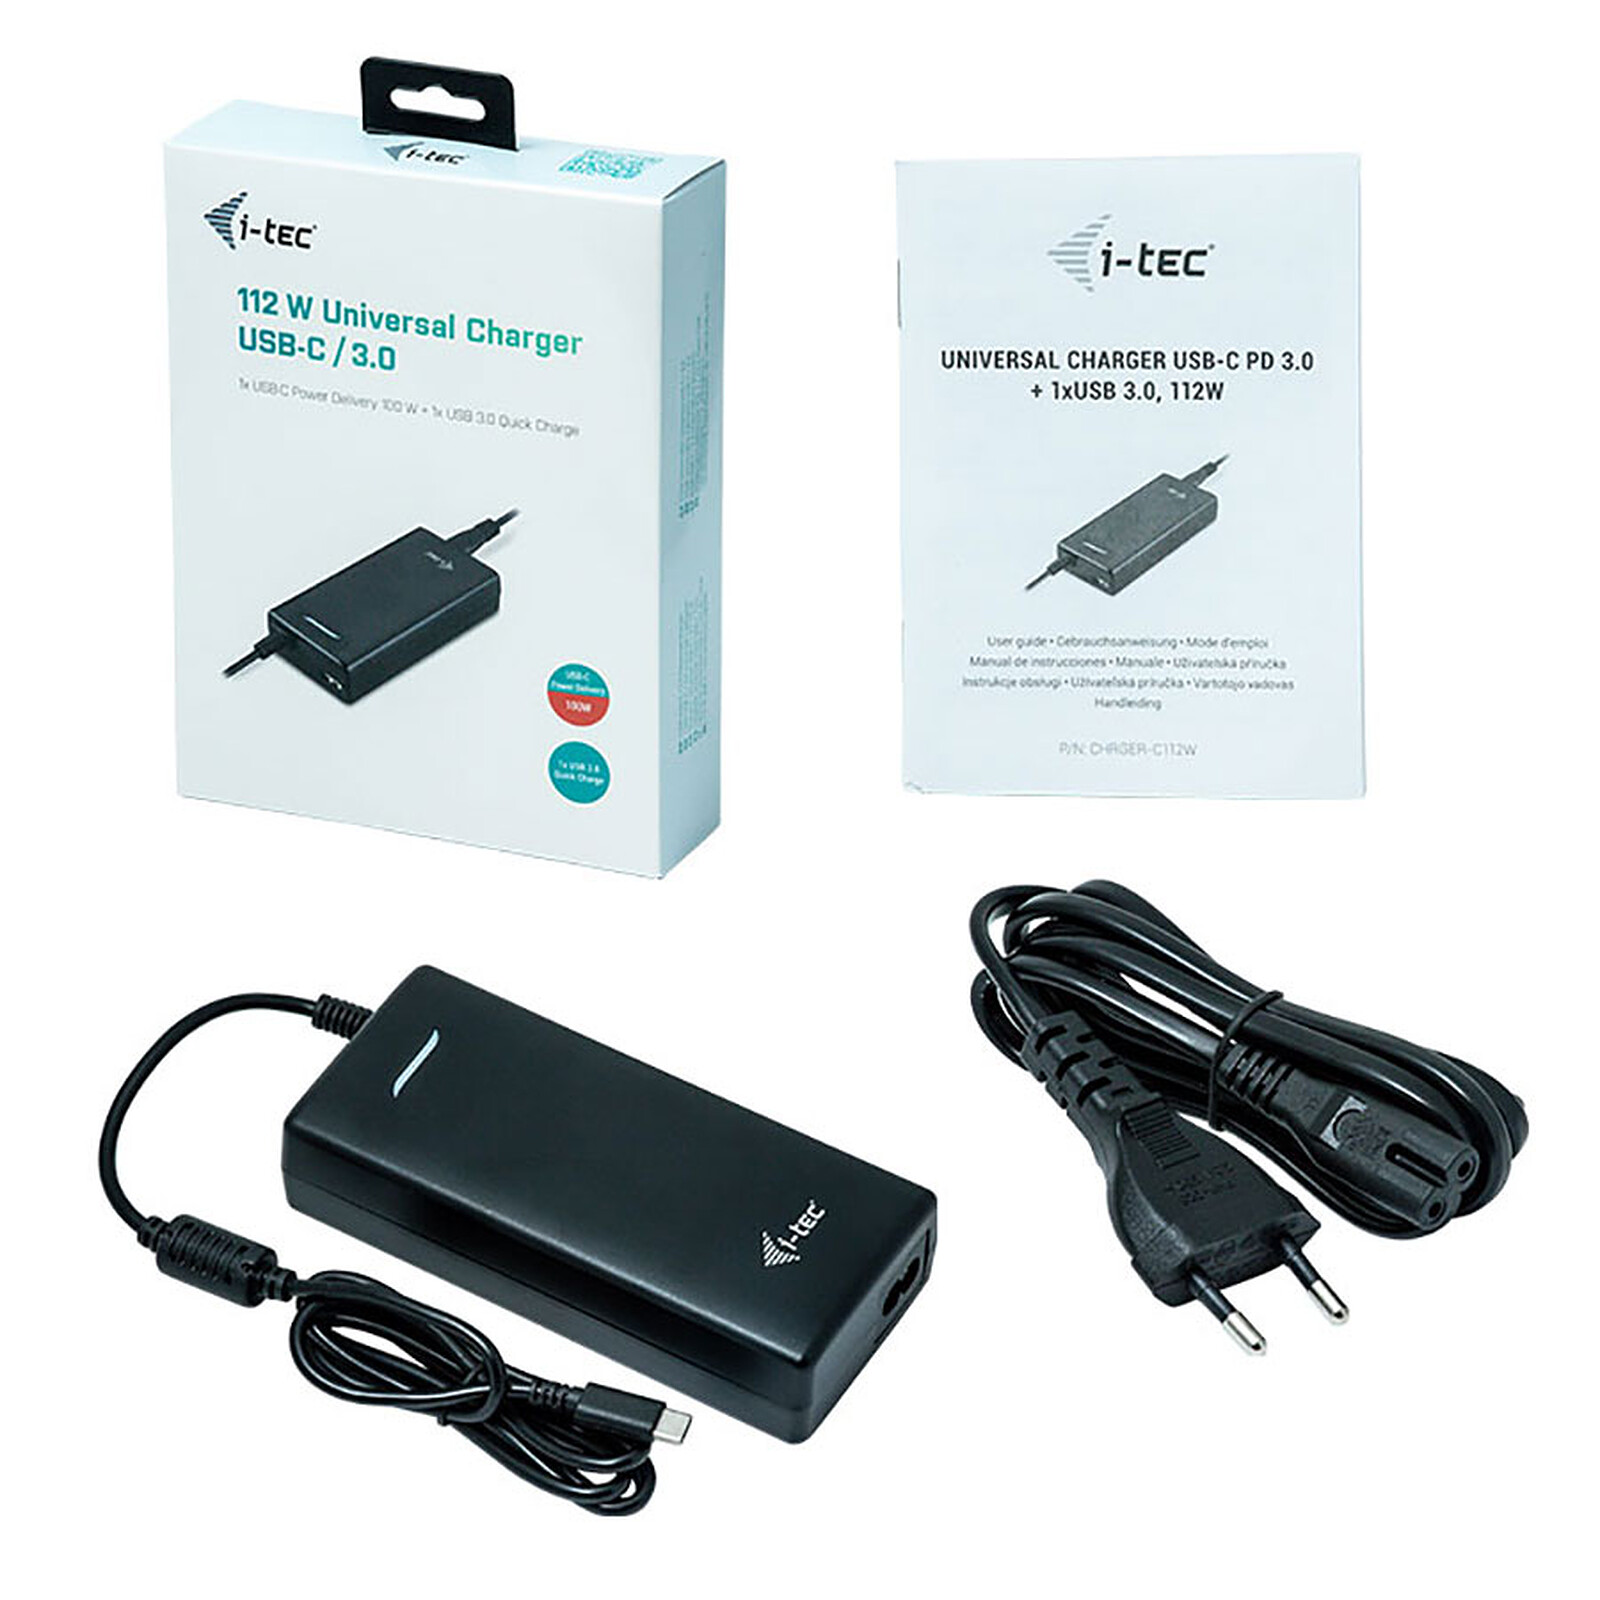 Cargador Universal USB Tipo C 65W para Portátil, Smartphone